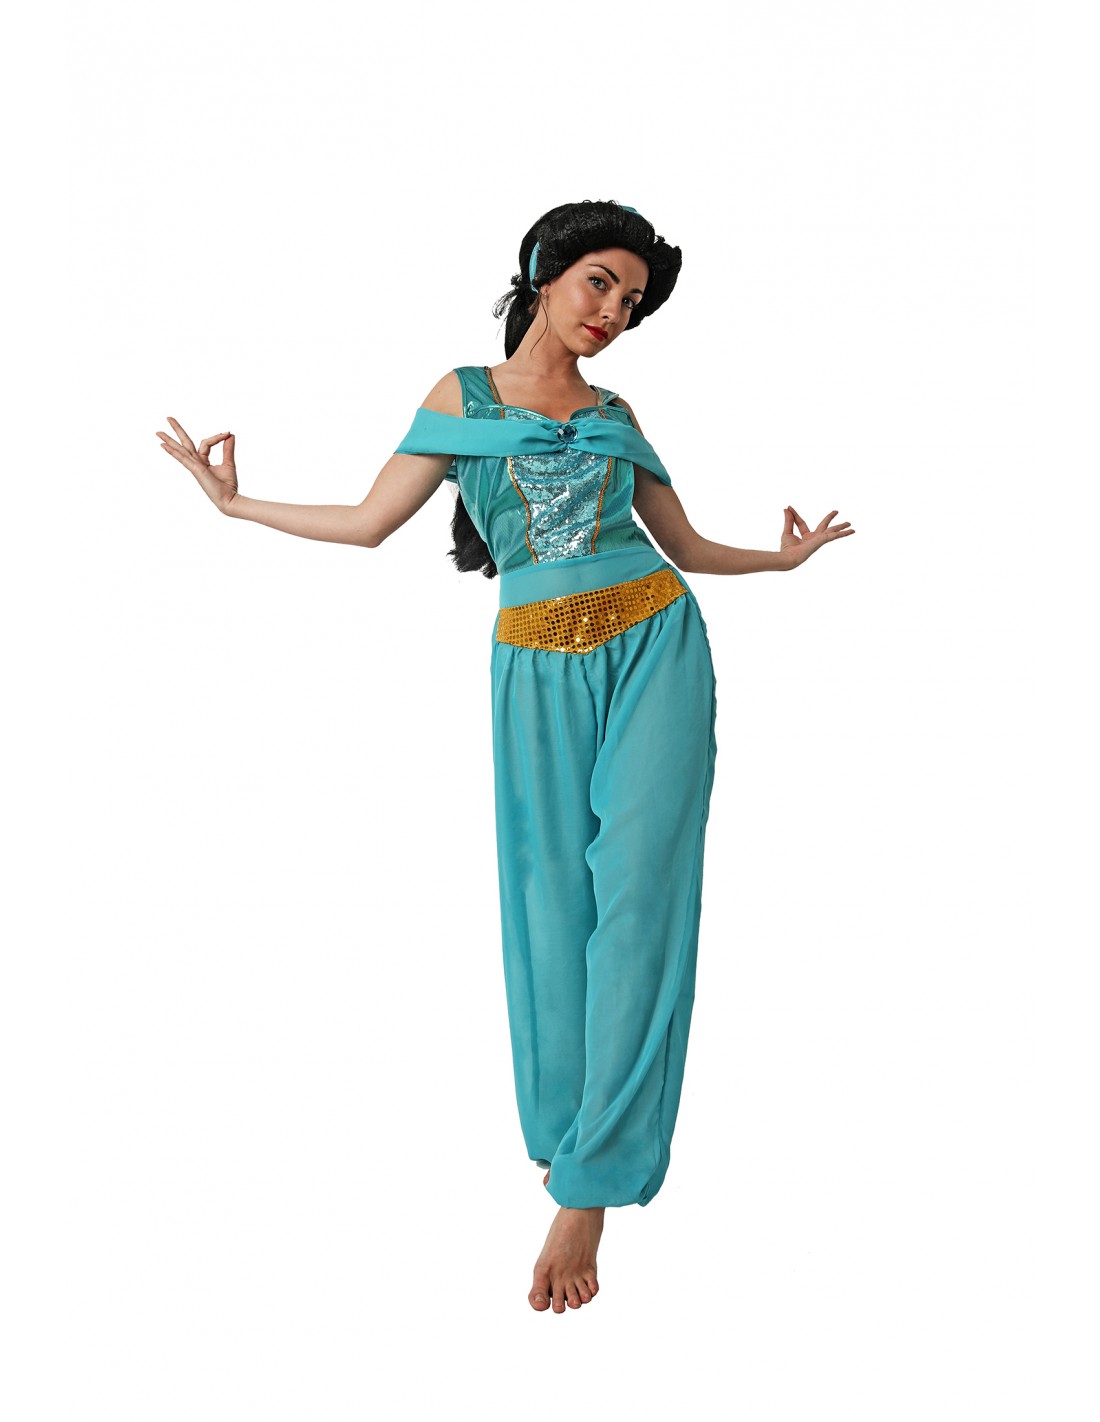 Franco sonido Evaluación Costumizate! Disfraz de Princesa árabe para mujer. Talla única.